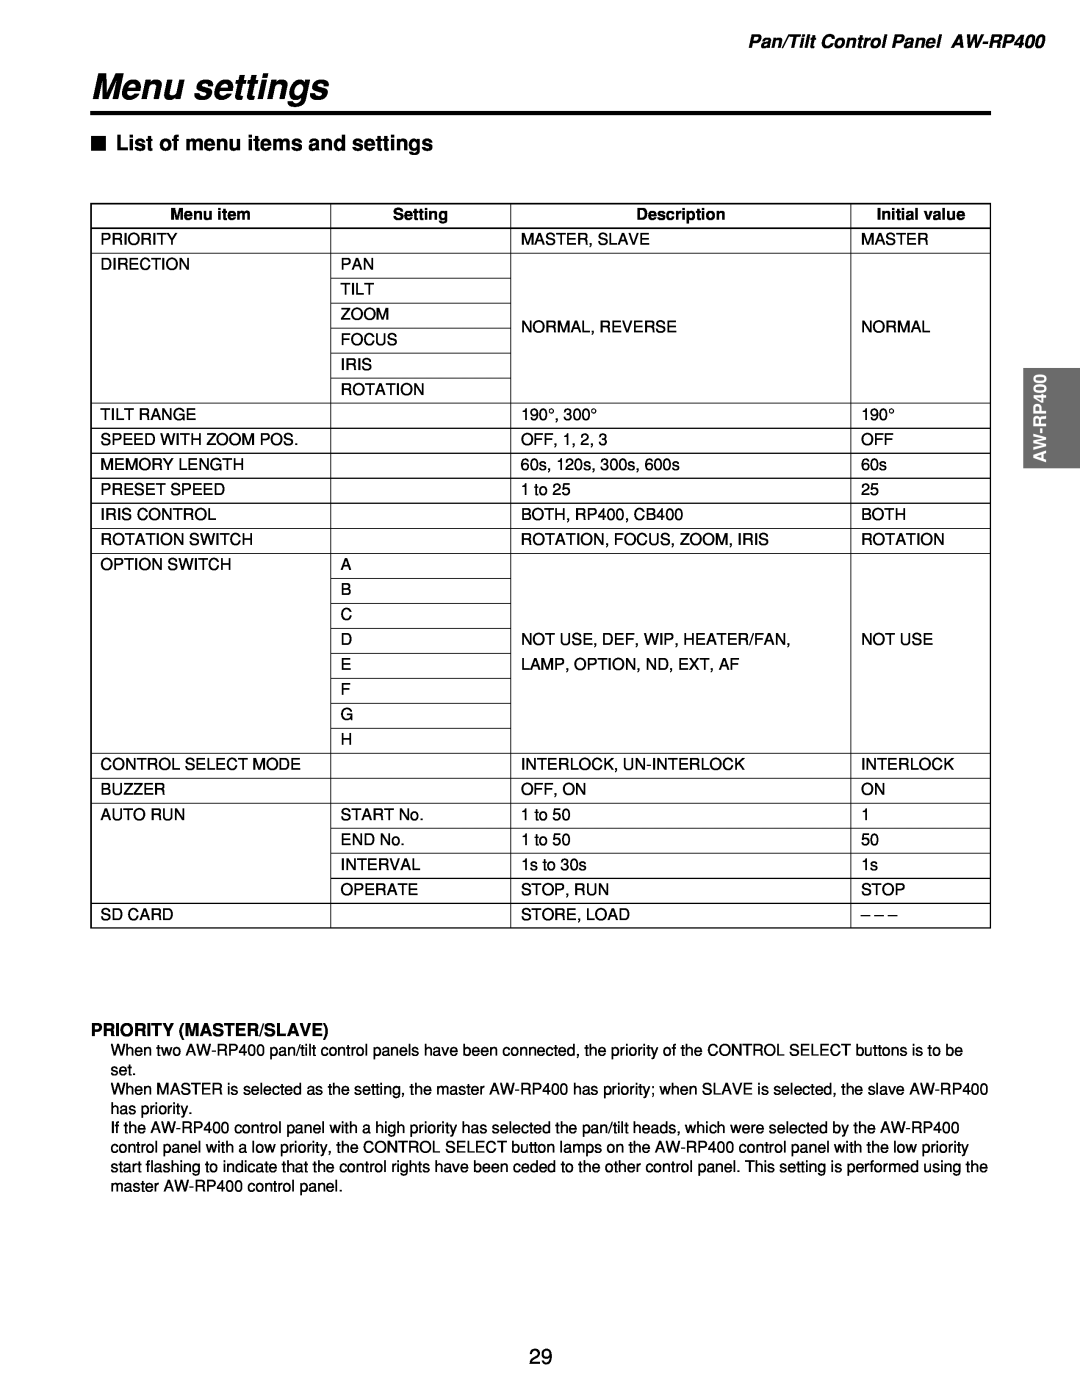 Panasonic AW-RL400, AW-PH400 $ List of menu items and settings, Priority Master/Slave, Menu item, Setting, Description 